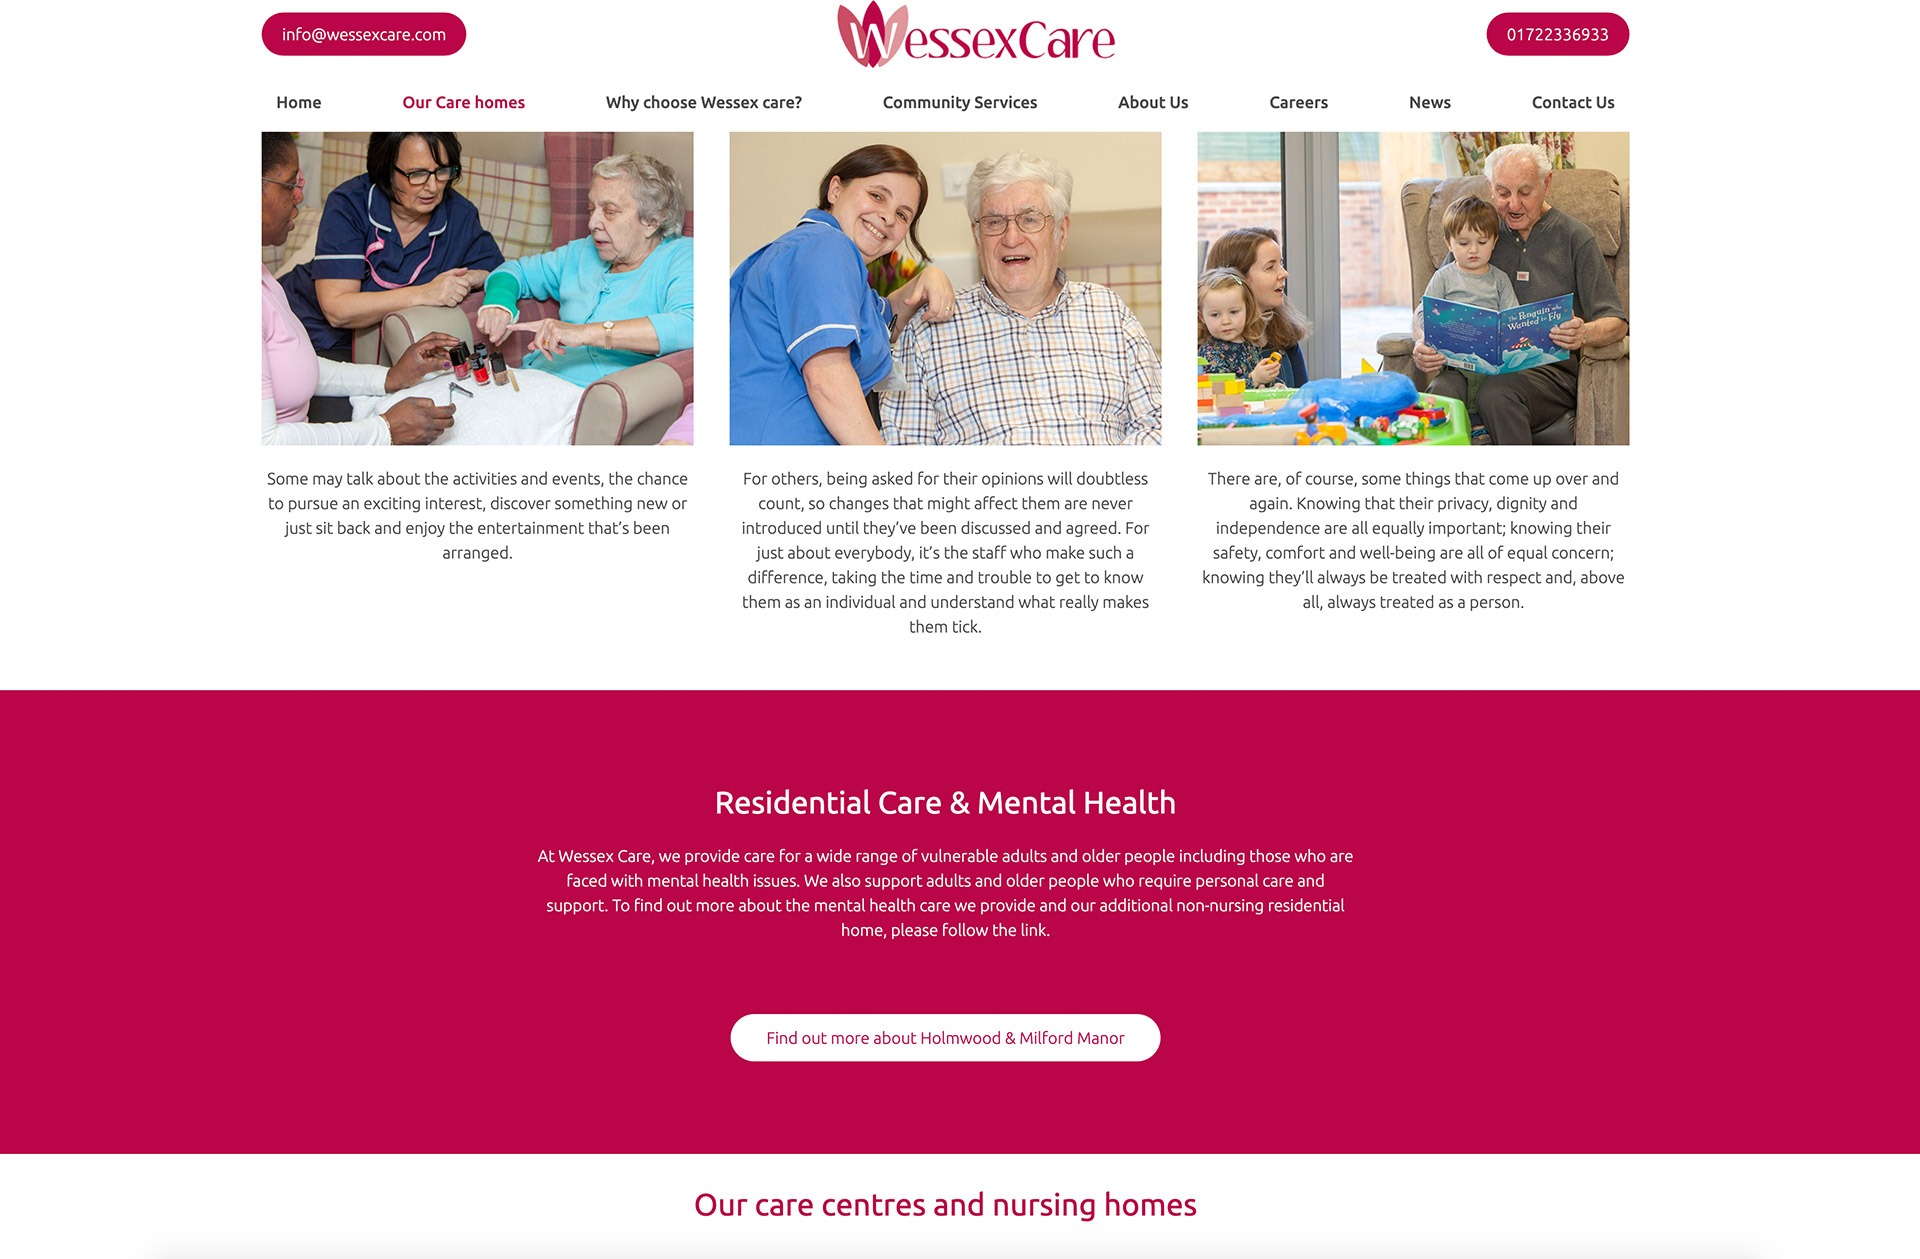 Wessex Care website